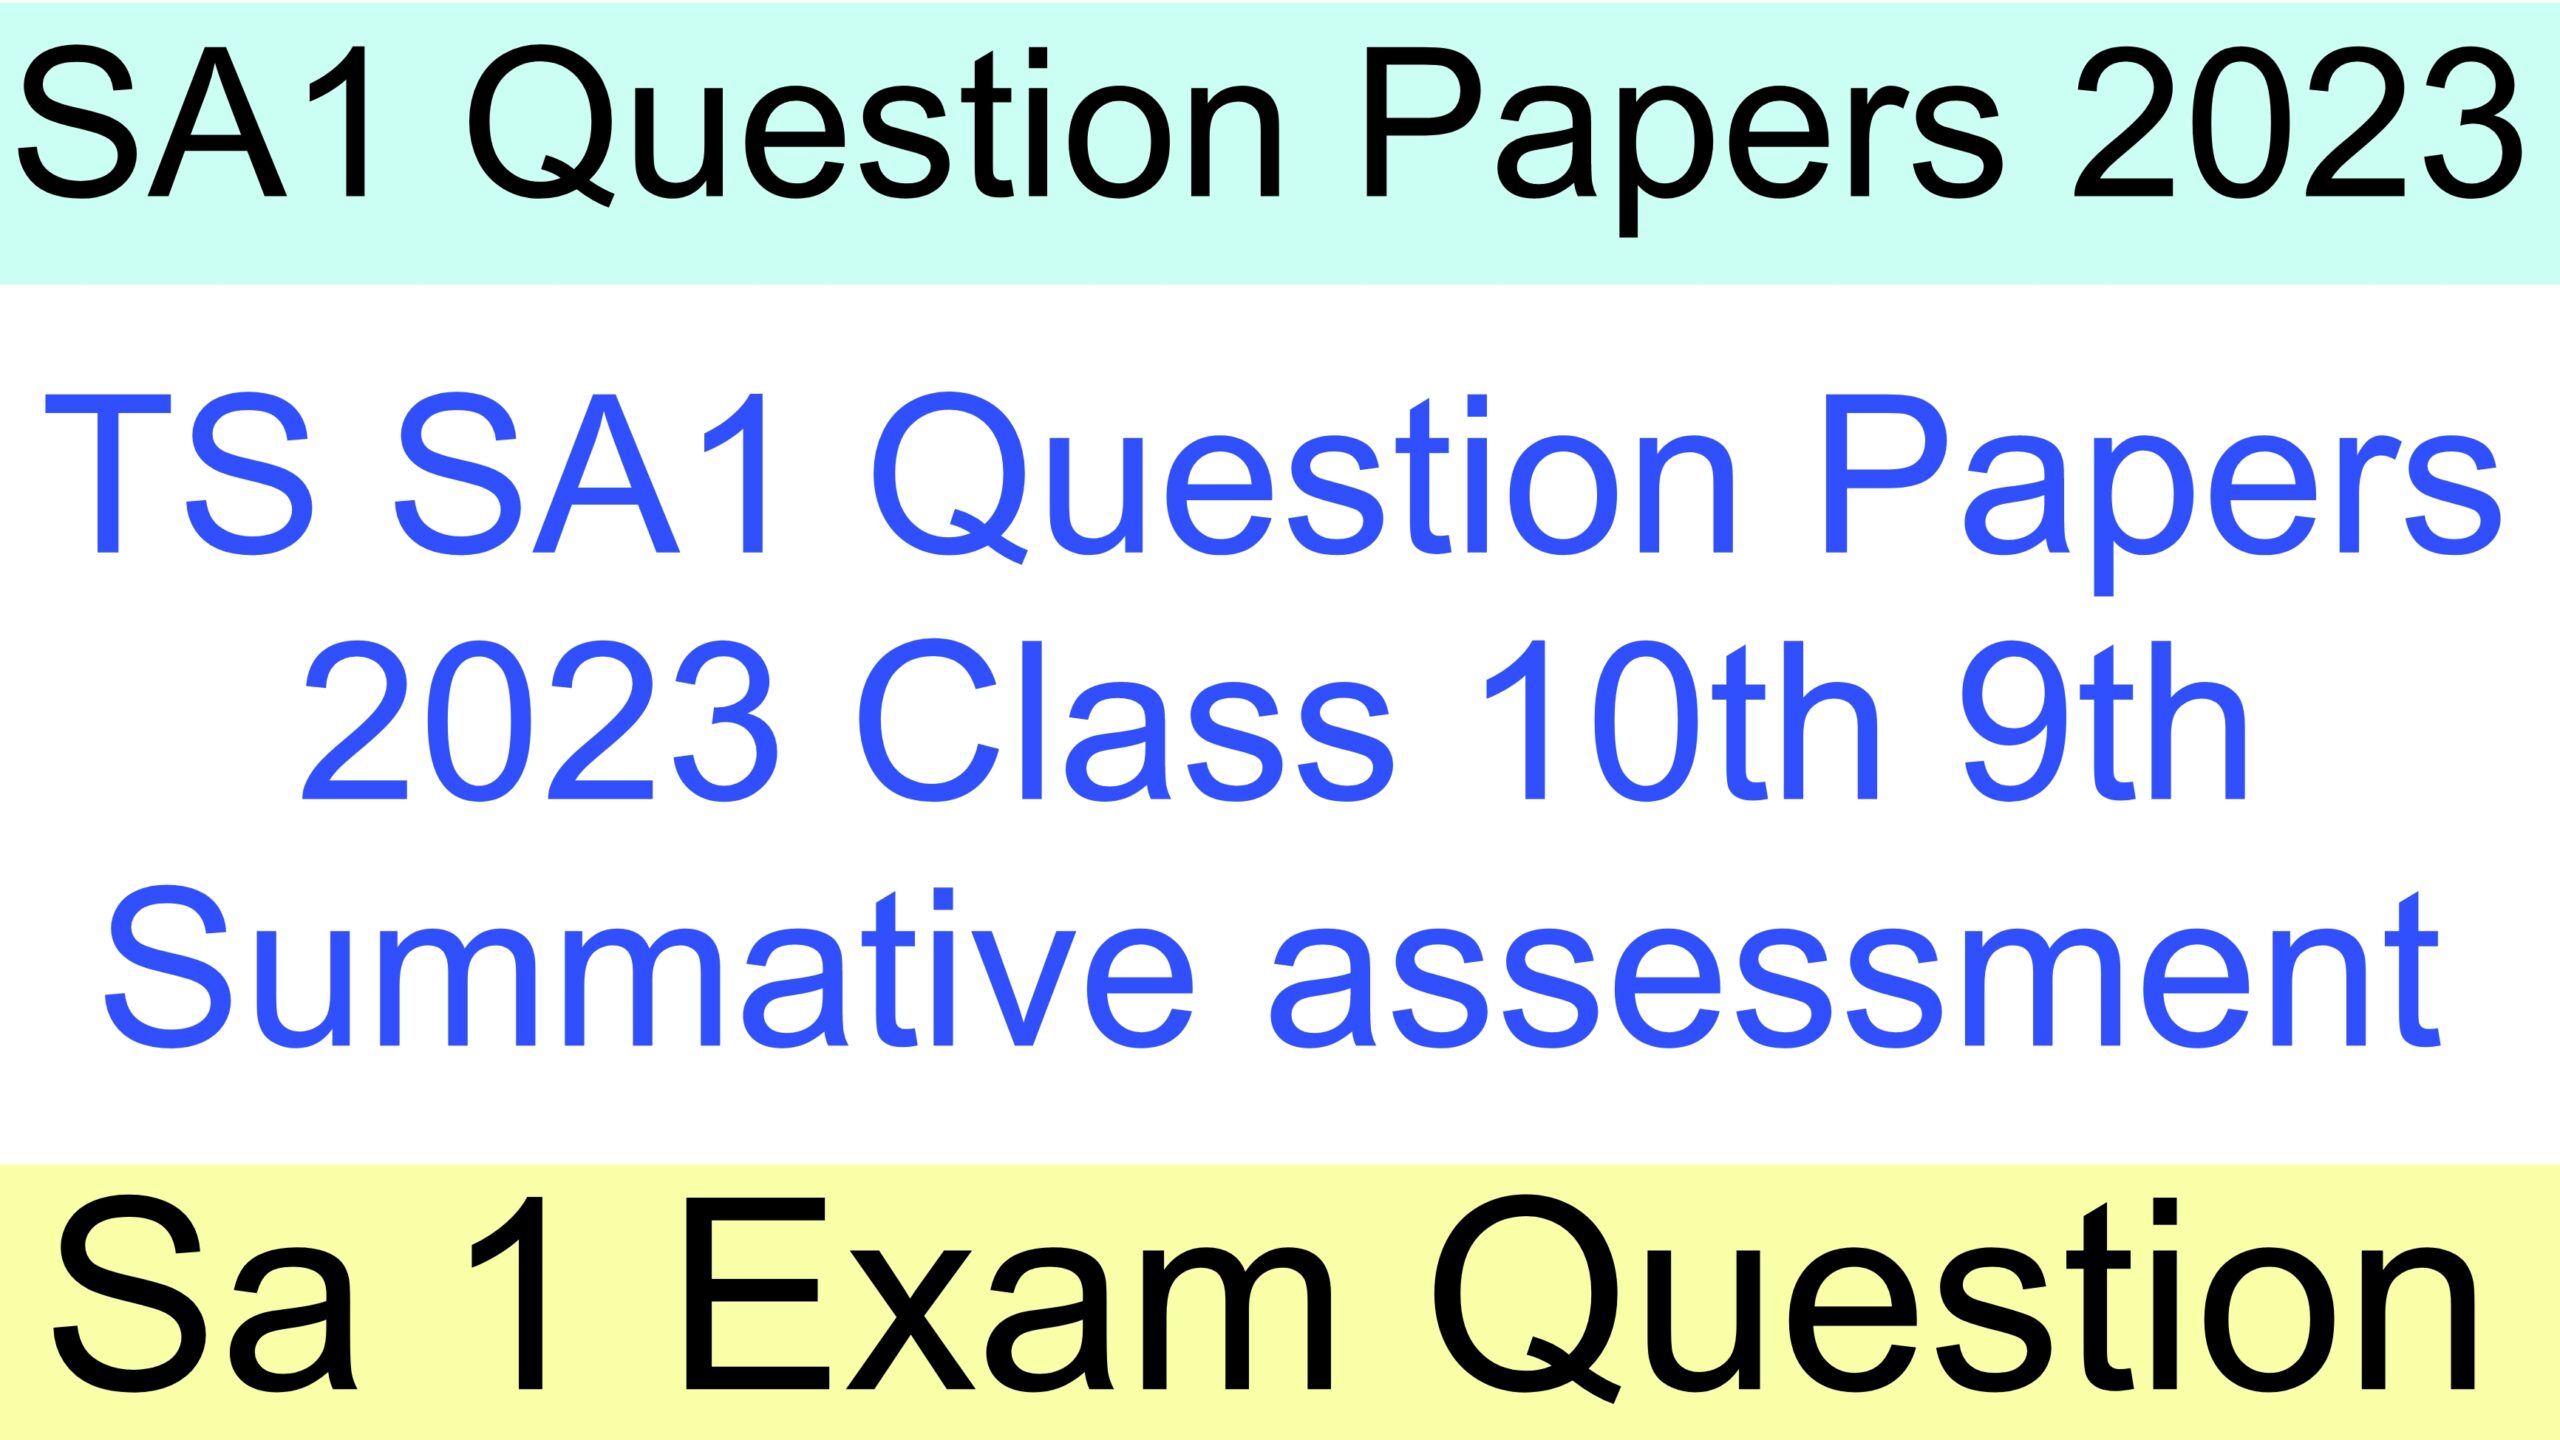 Sa 1 sumarmative assessment Question paper 2023